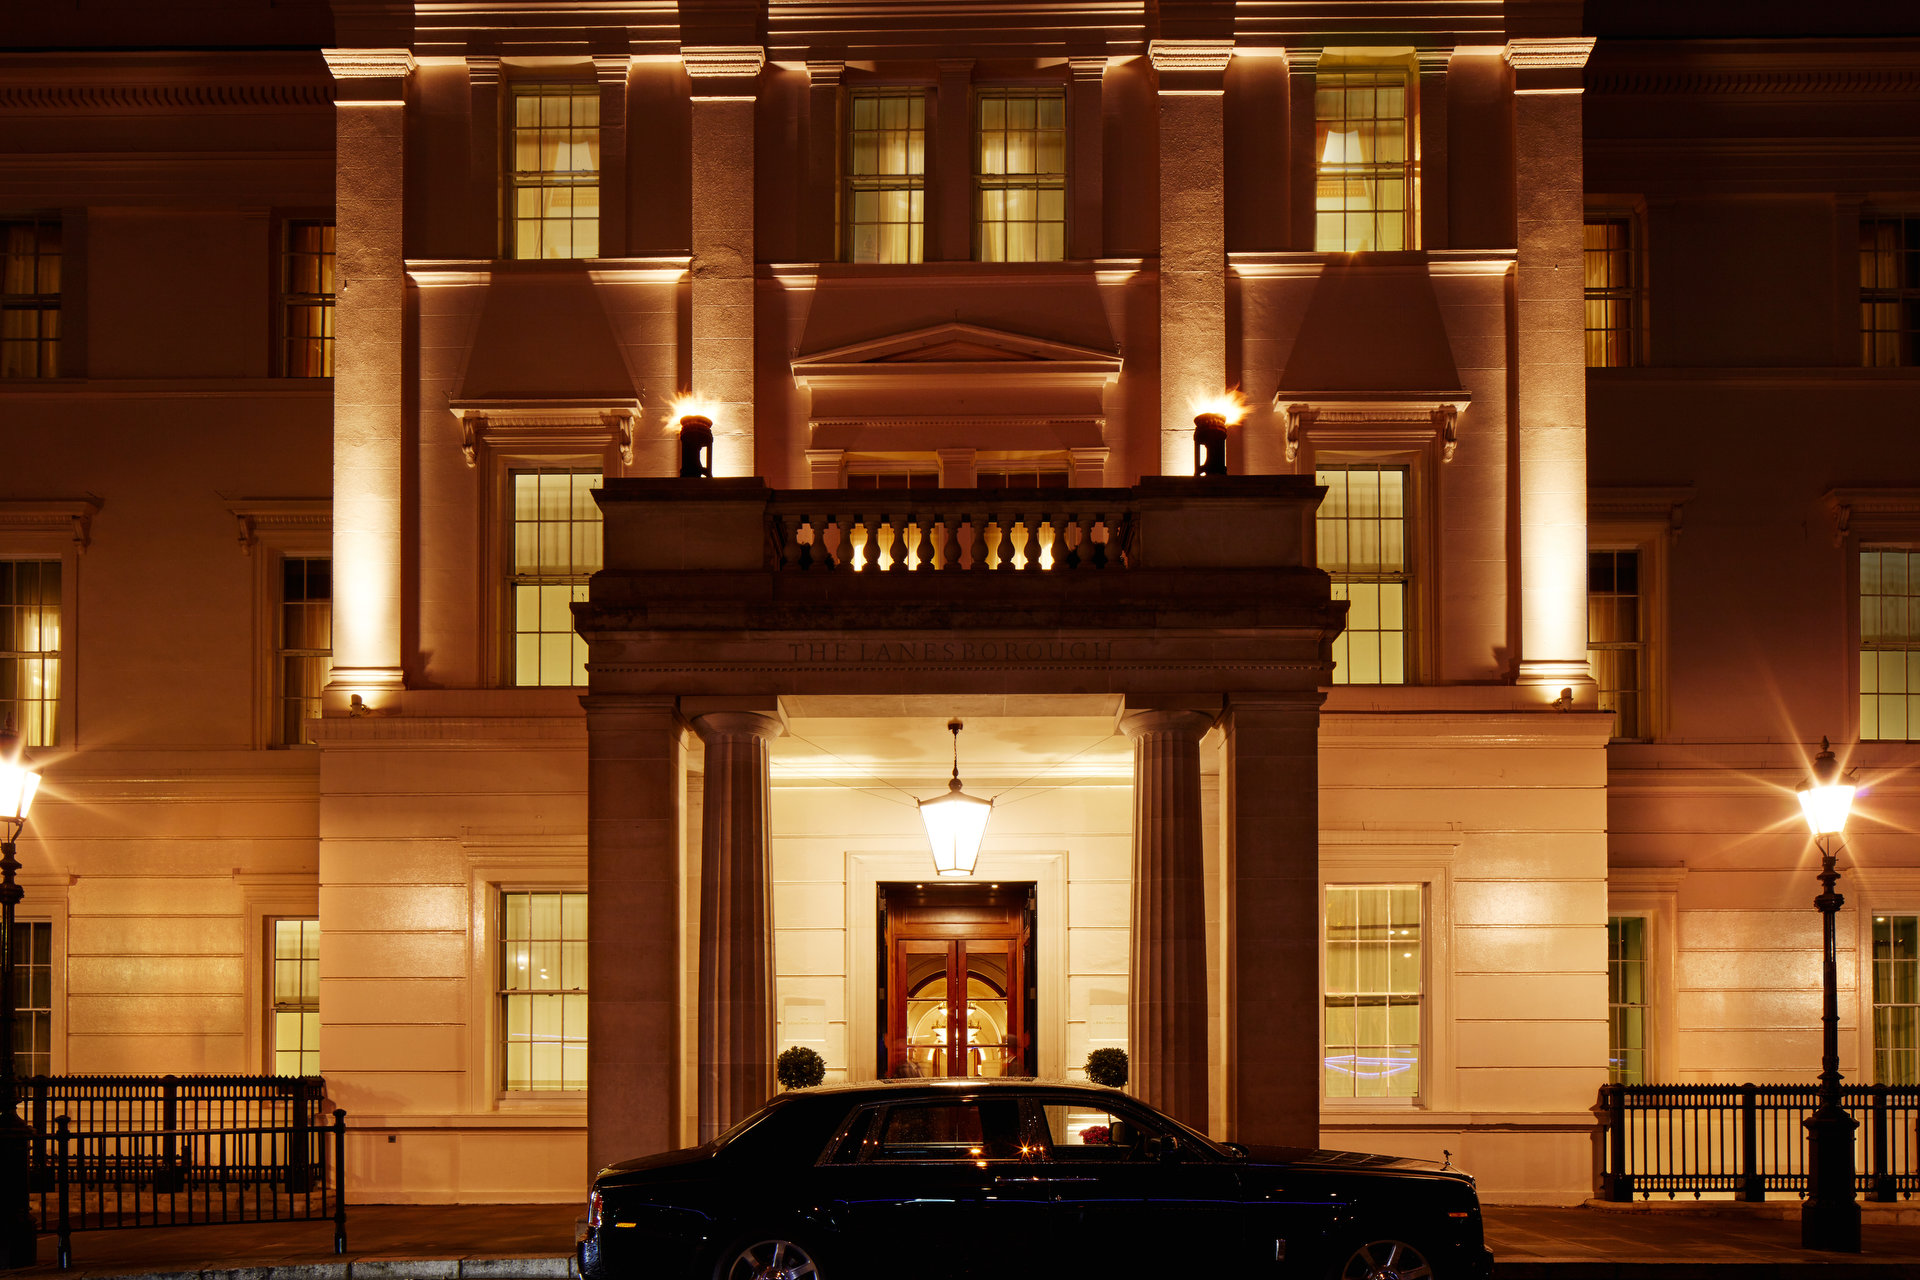 Nighttime photograph of The Lanesborough Hotel